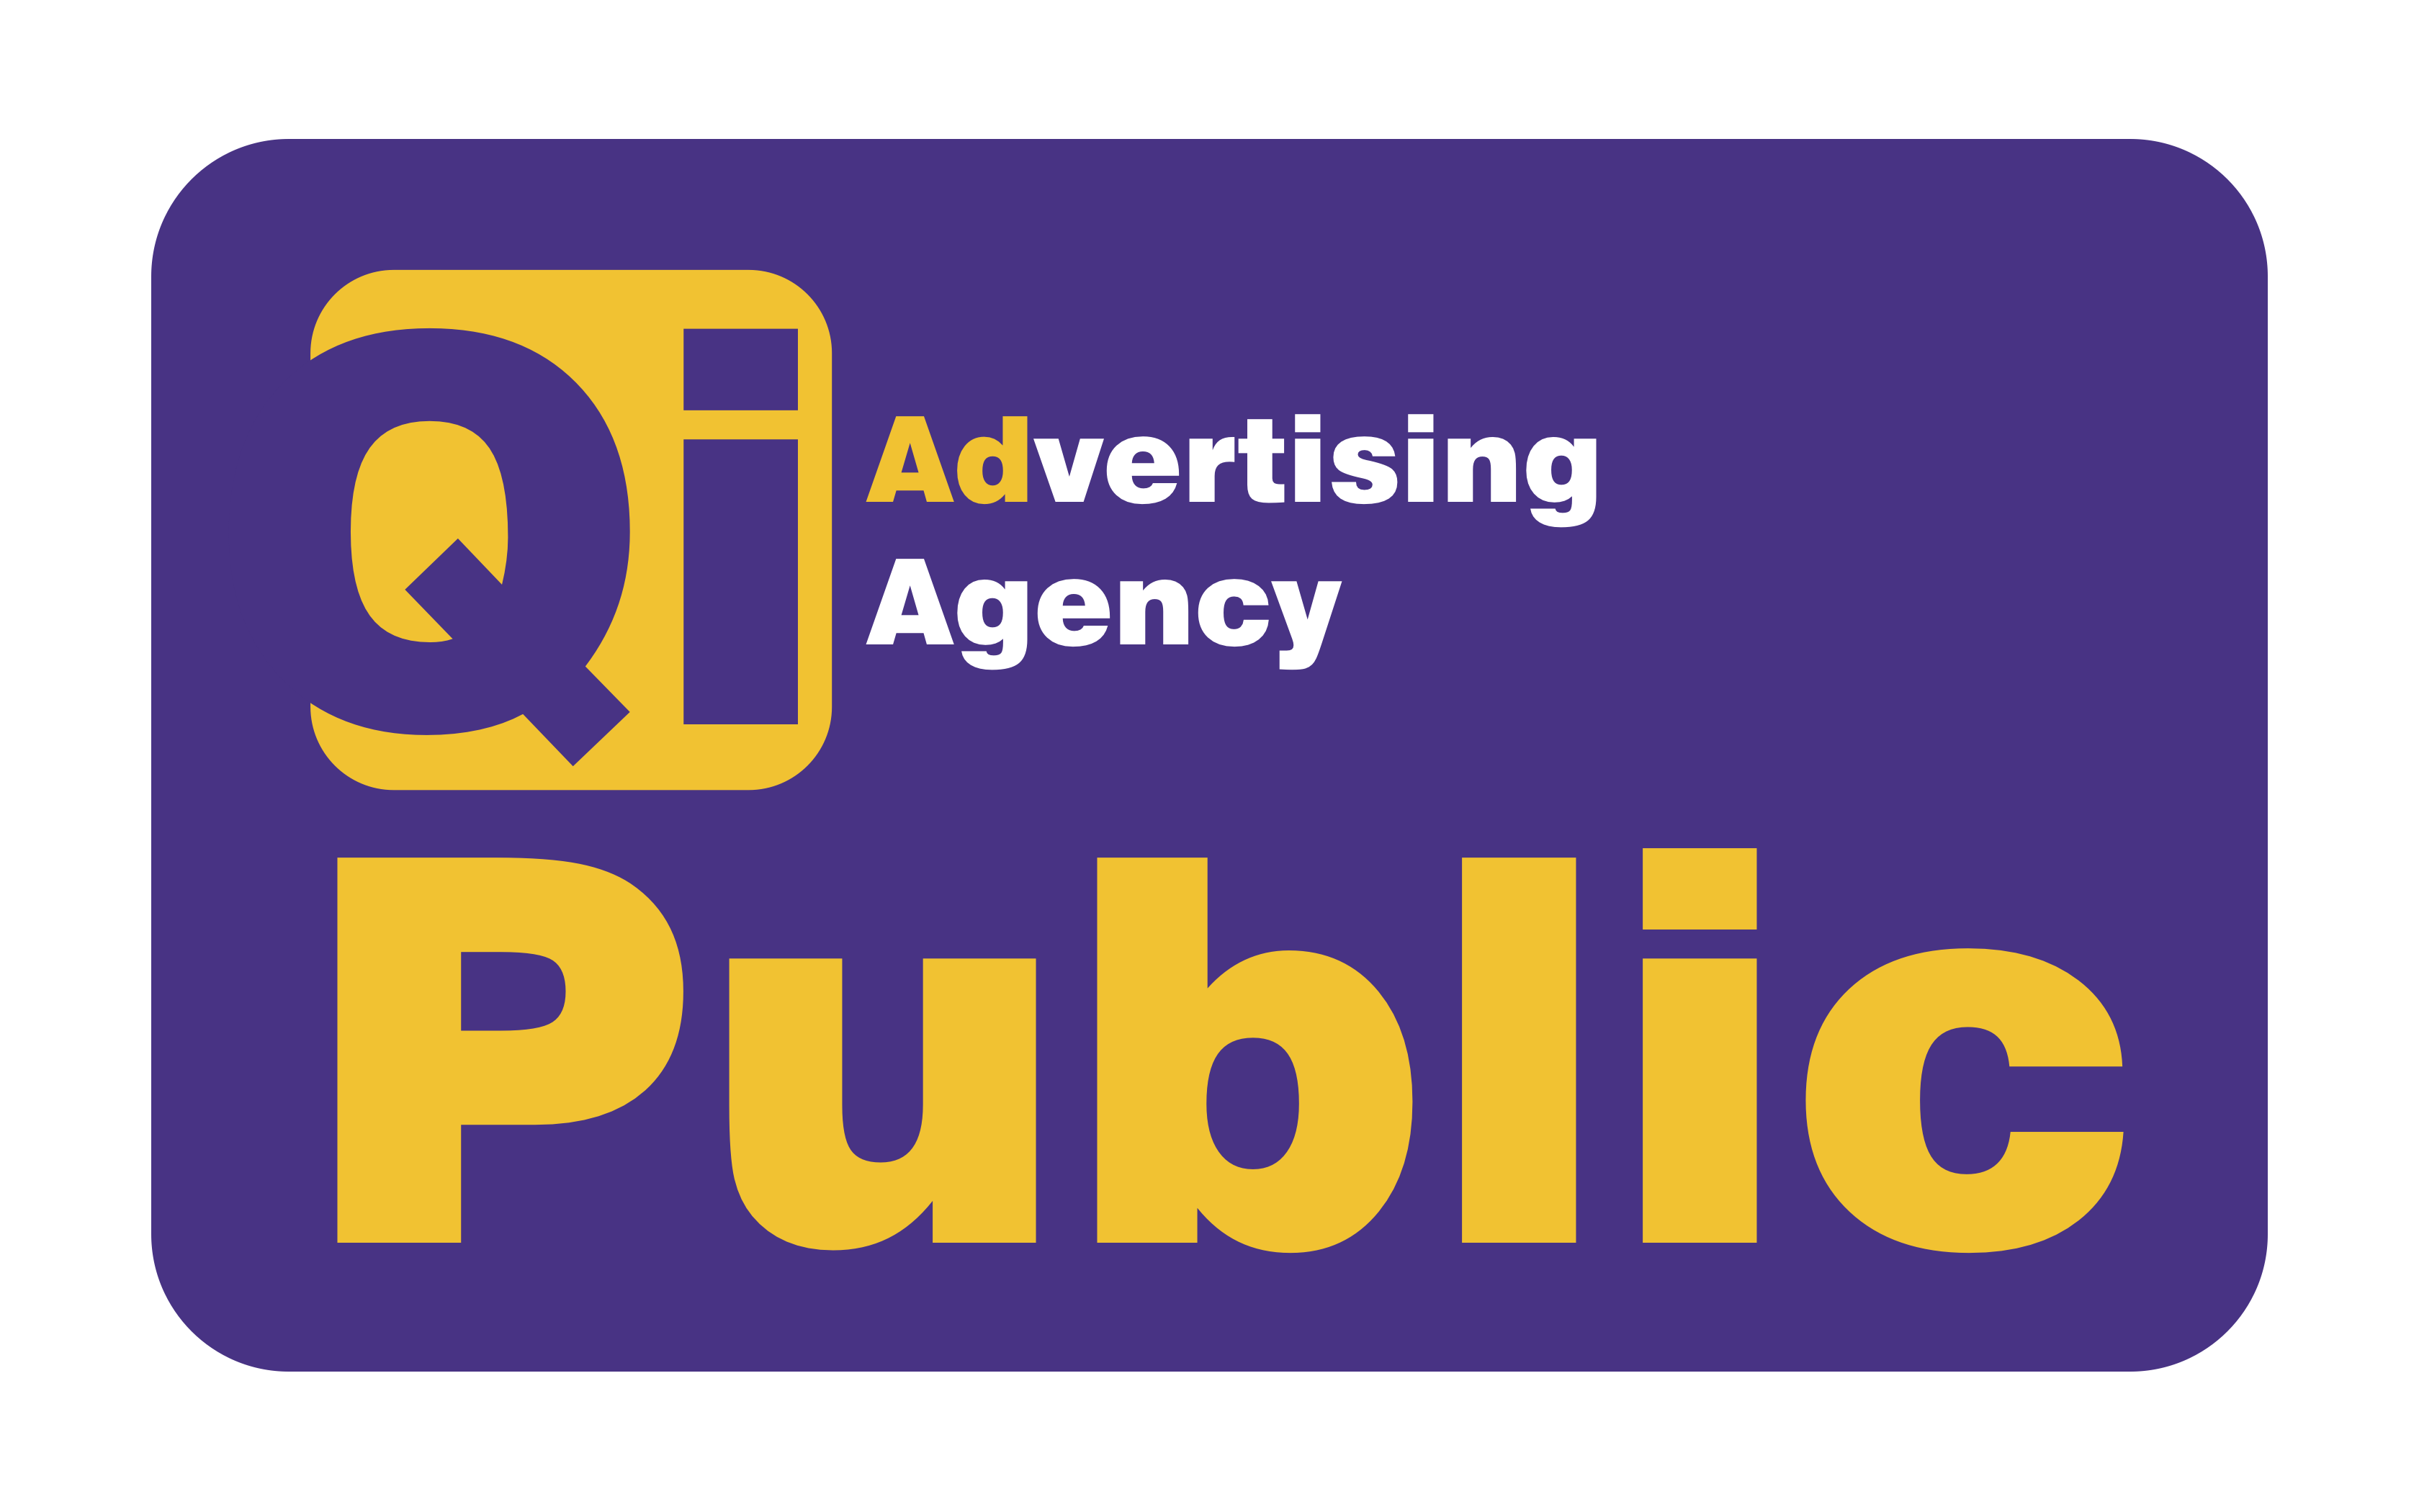 Qi Public advertising agency